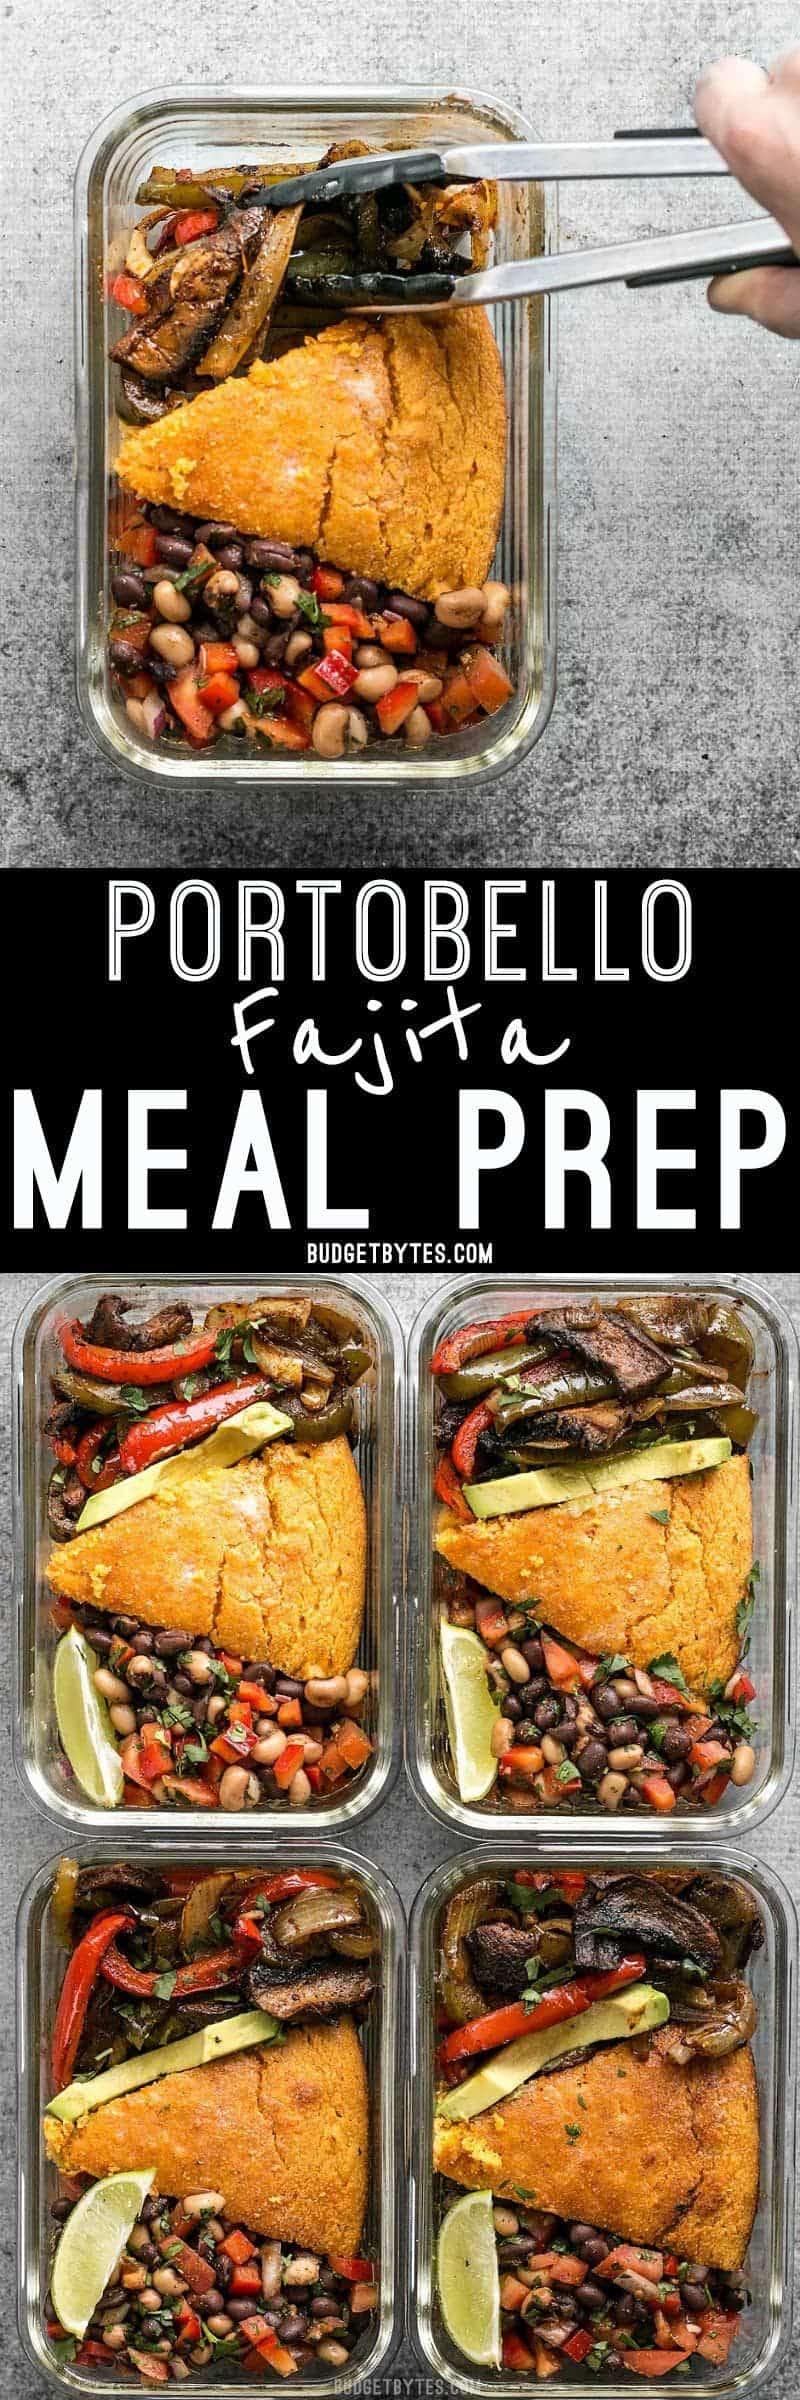 This smoky chipotle portobello fajita meal prep features mixed fajita vegetables, sweet potato cornbread, and cowboy caviar for a filling vegetarian meal! BudgetBytes.com